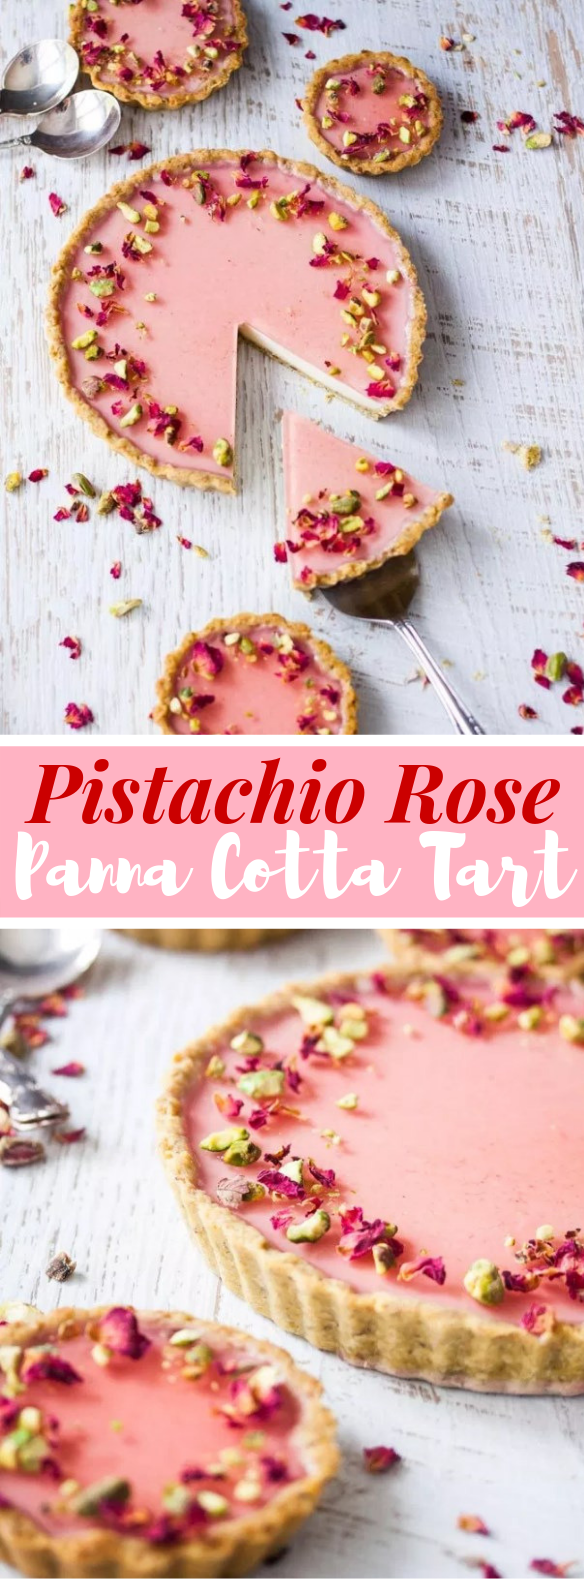 PISTACHIO ROSE PANNA COTTA TART #dessert #recipes